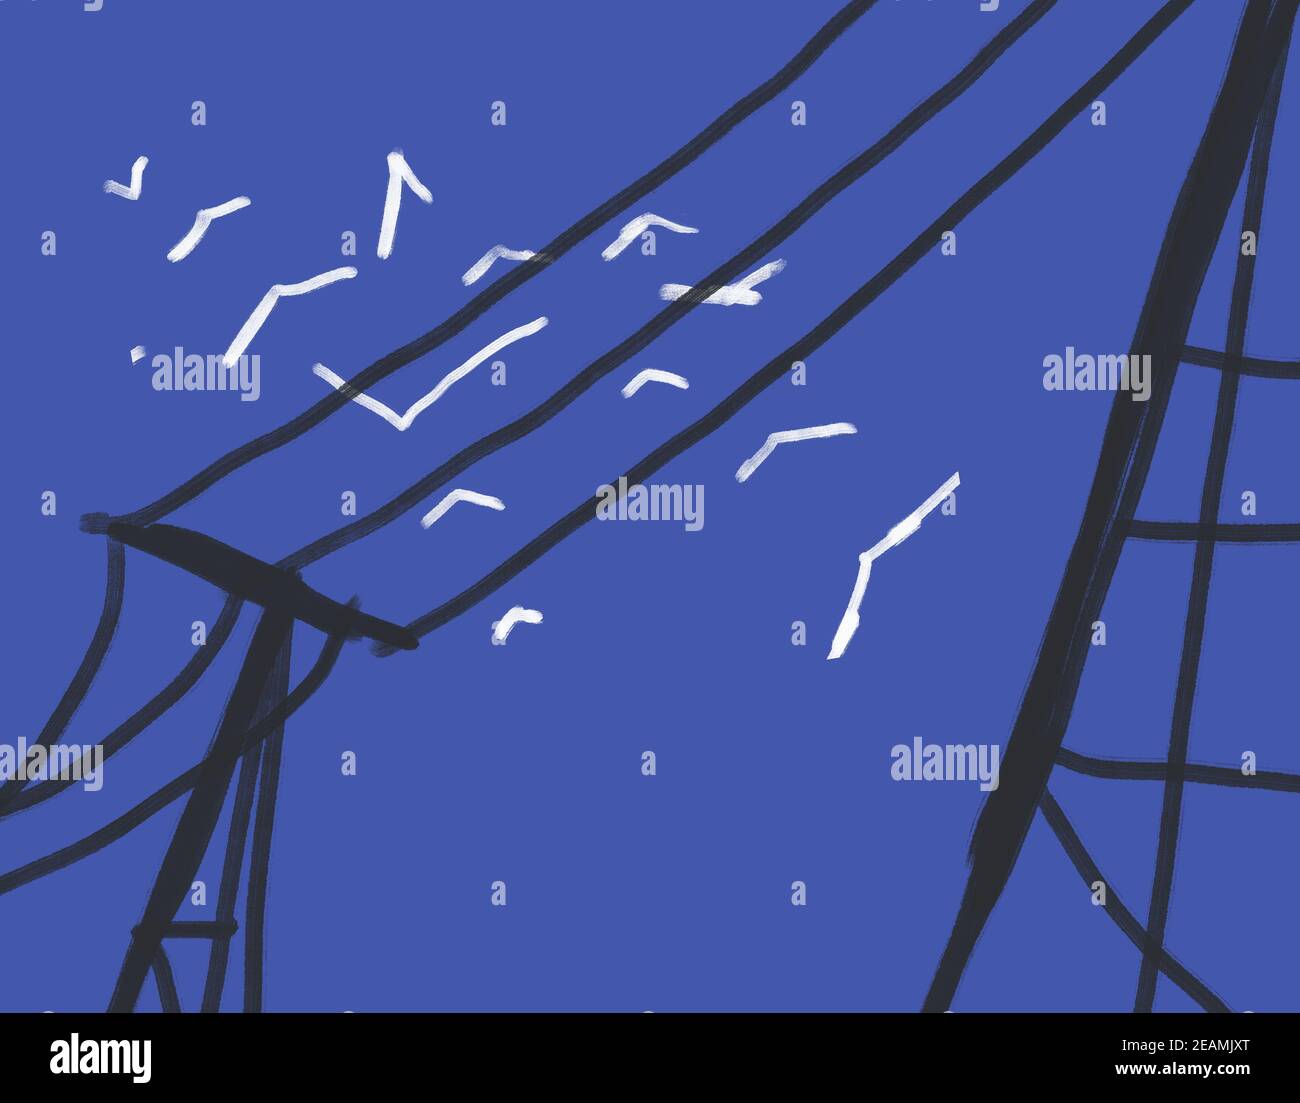 Painting minimalist blue sky with white bird fly arround the black electric pylon.illustration in trendy art. Stock Photo